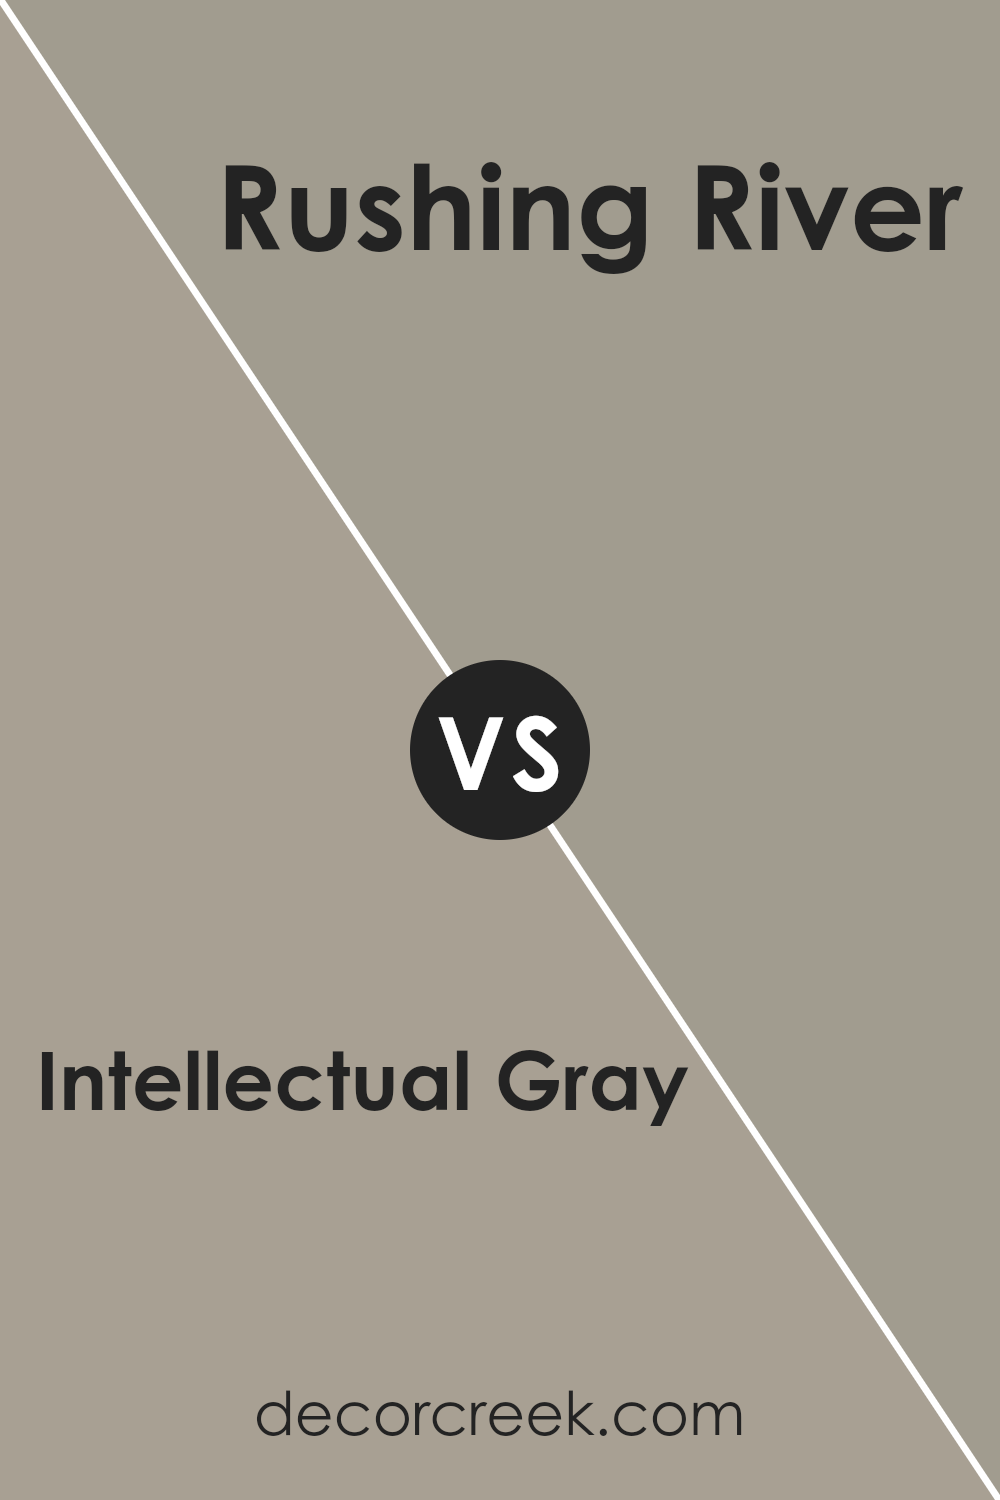 intellectual_gray_sw_7045_vs_rushing_river_sw_7746